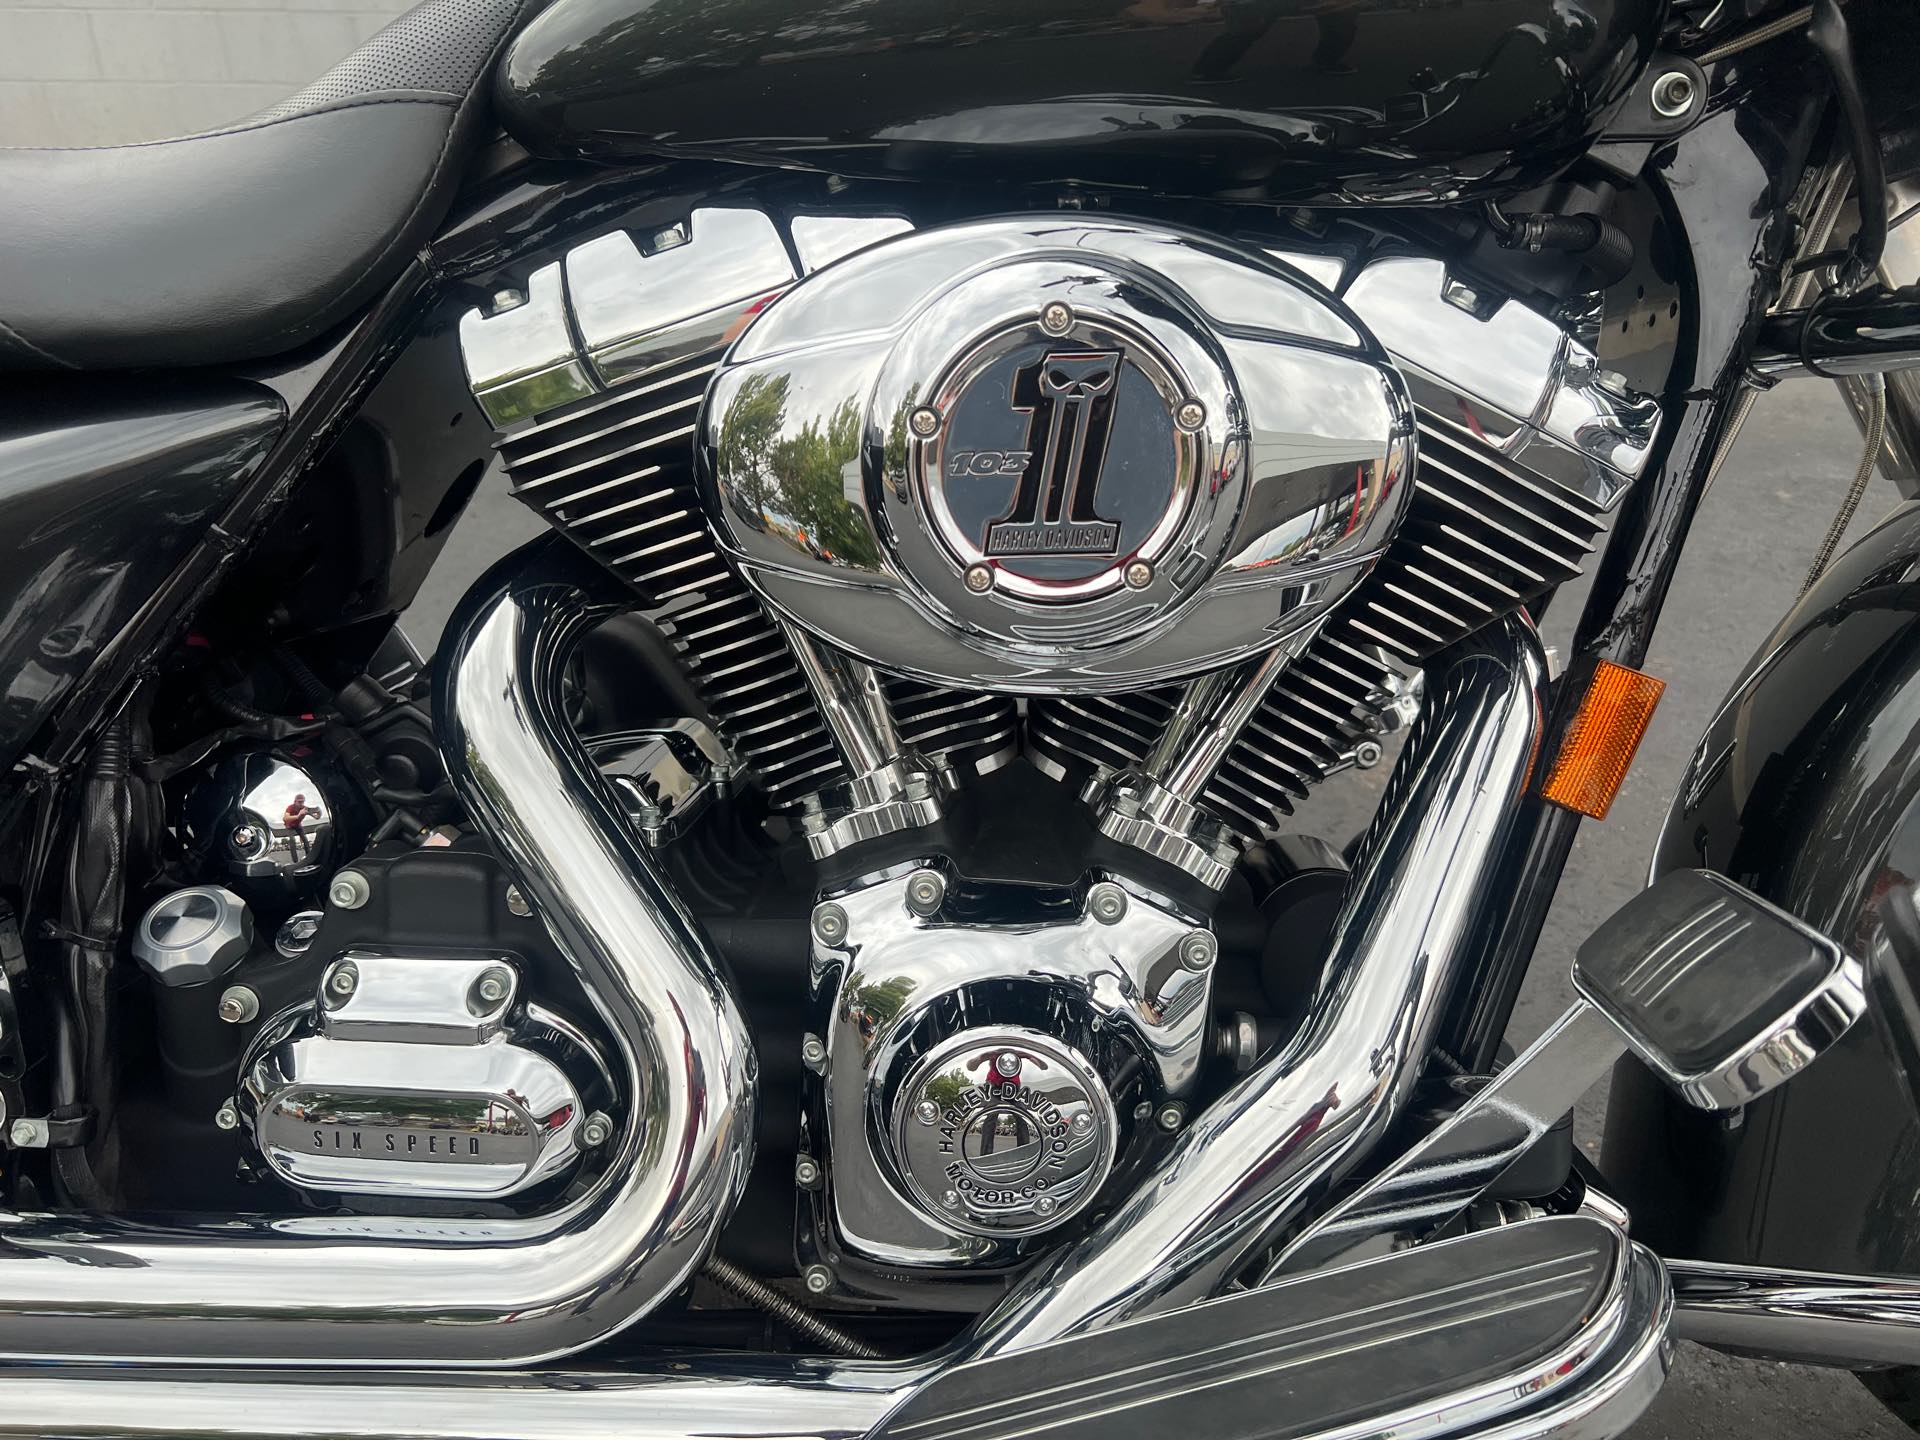 2007 Harley-Davidson Street Glide Base at Aces Motorcycles - Fort Collins